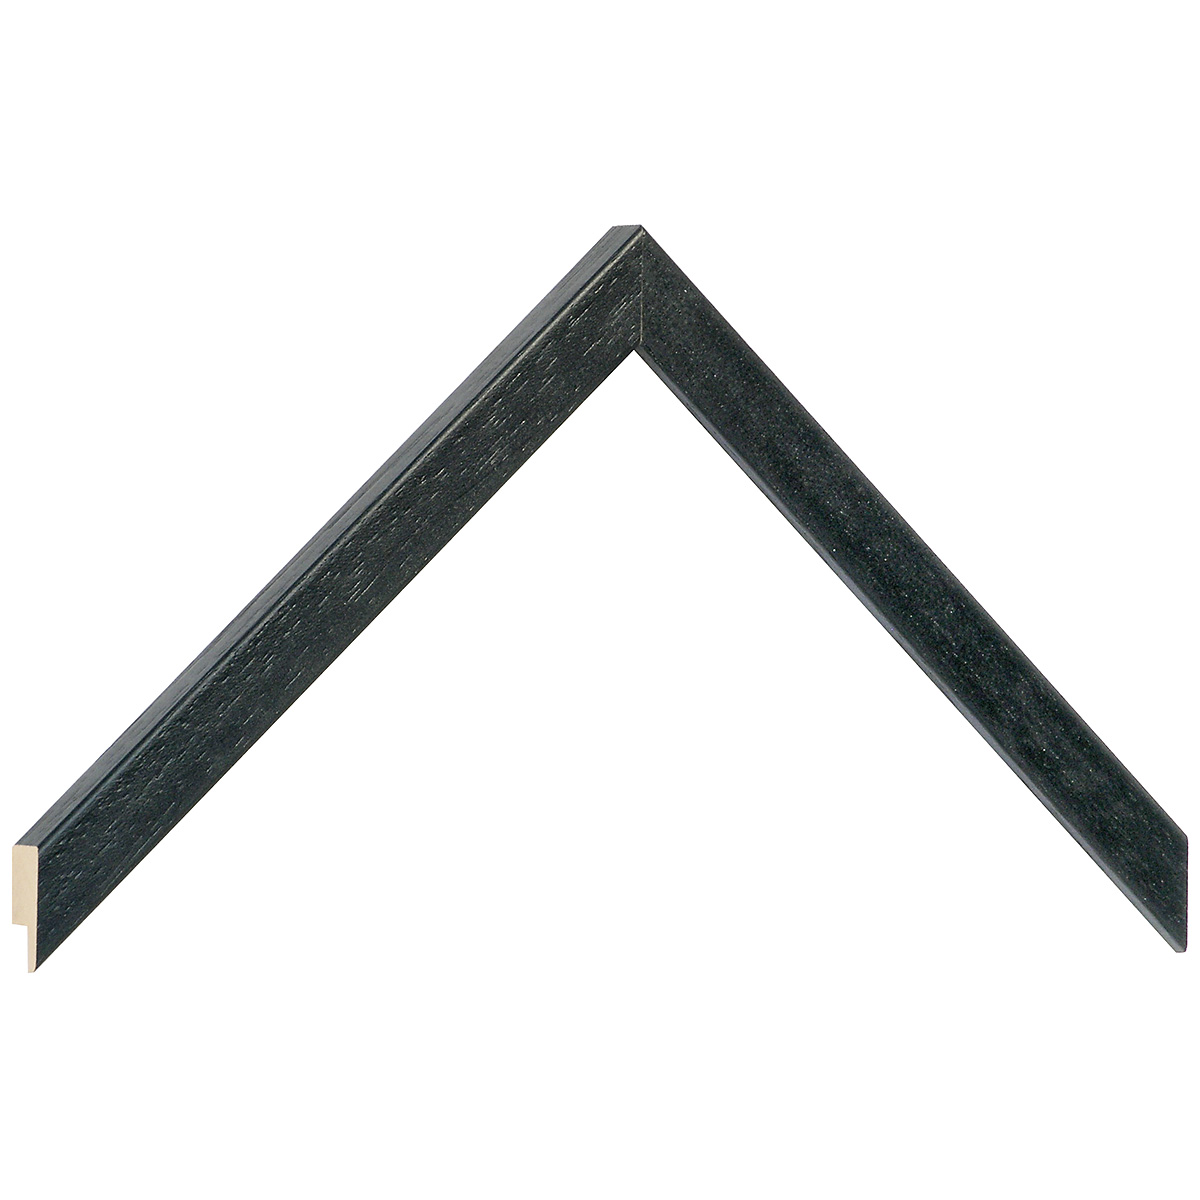 Moulding ayous width 15mm height 14 - black, open grain - Sample